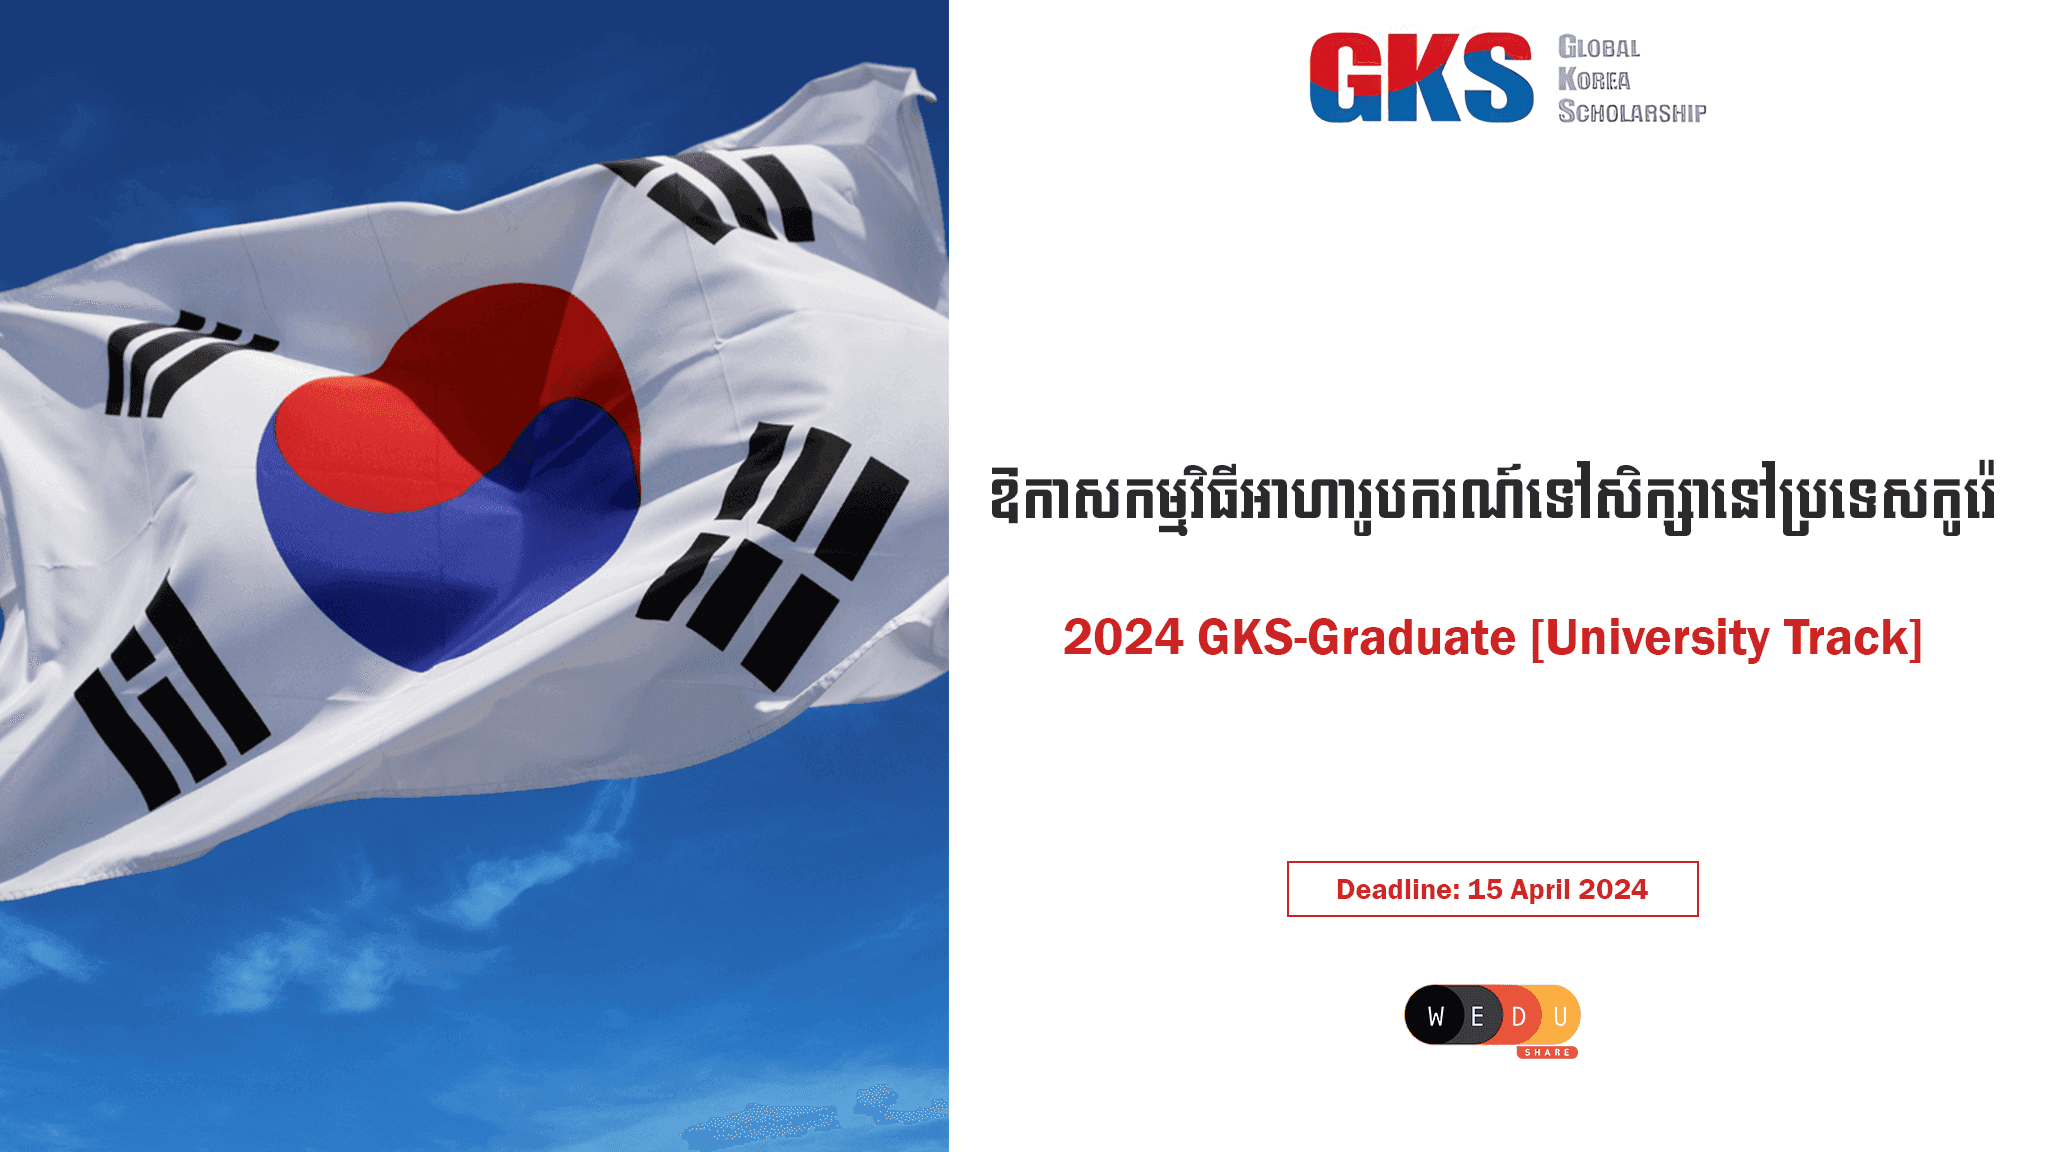 2024 Global Korea Scholarship-Graduate [University Track]